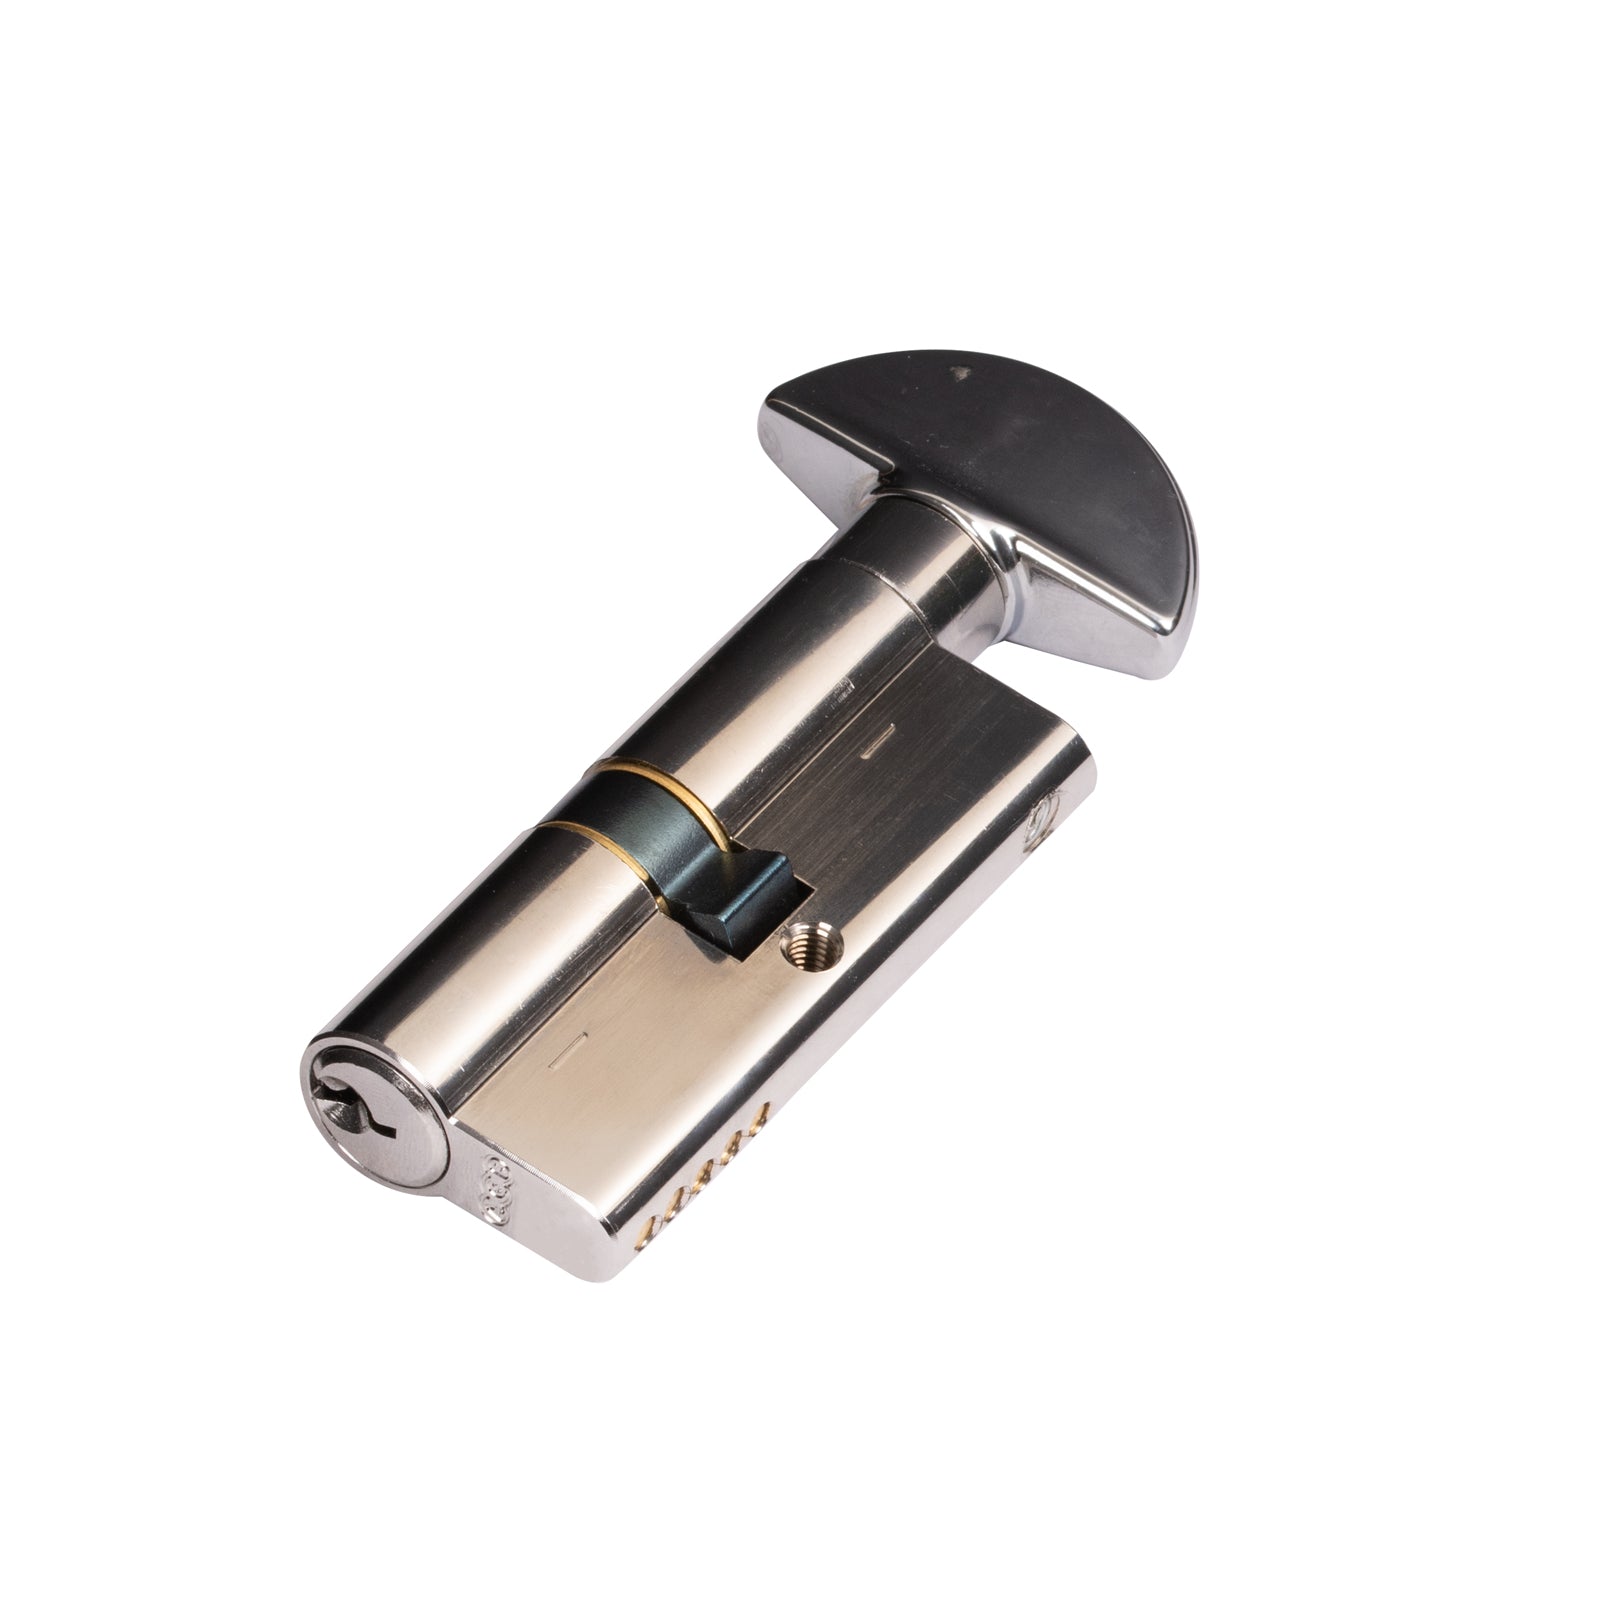 euro 5 pin key to turn euro cylinder lock, AGB locks